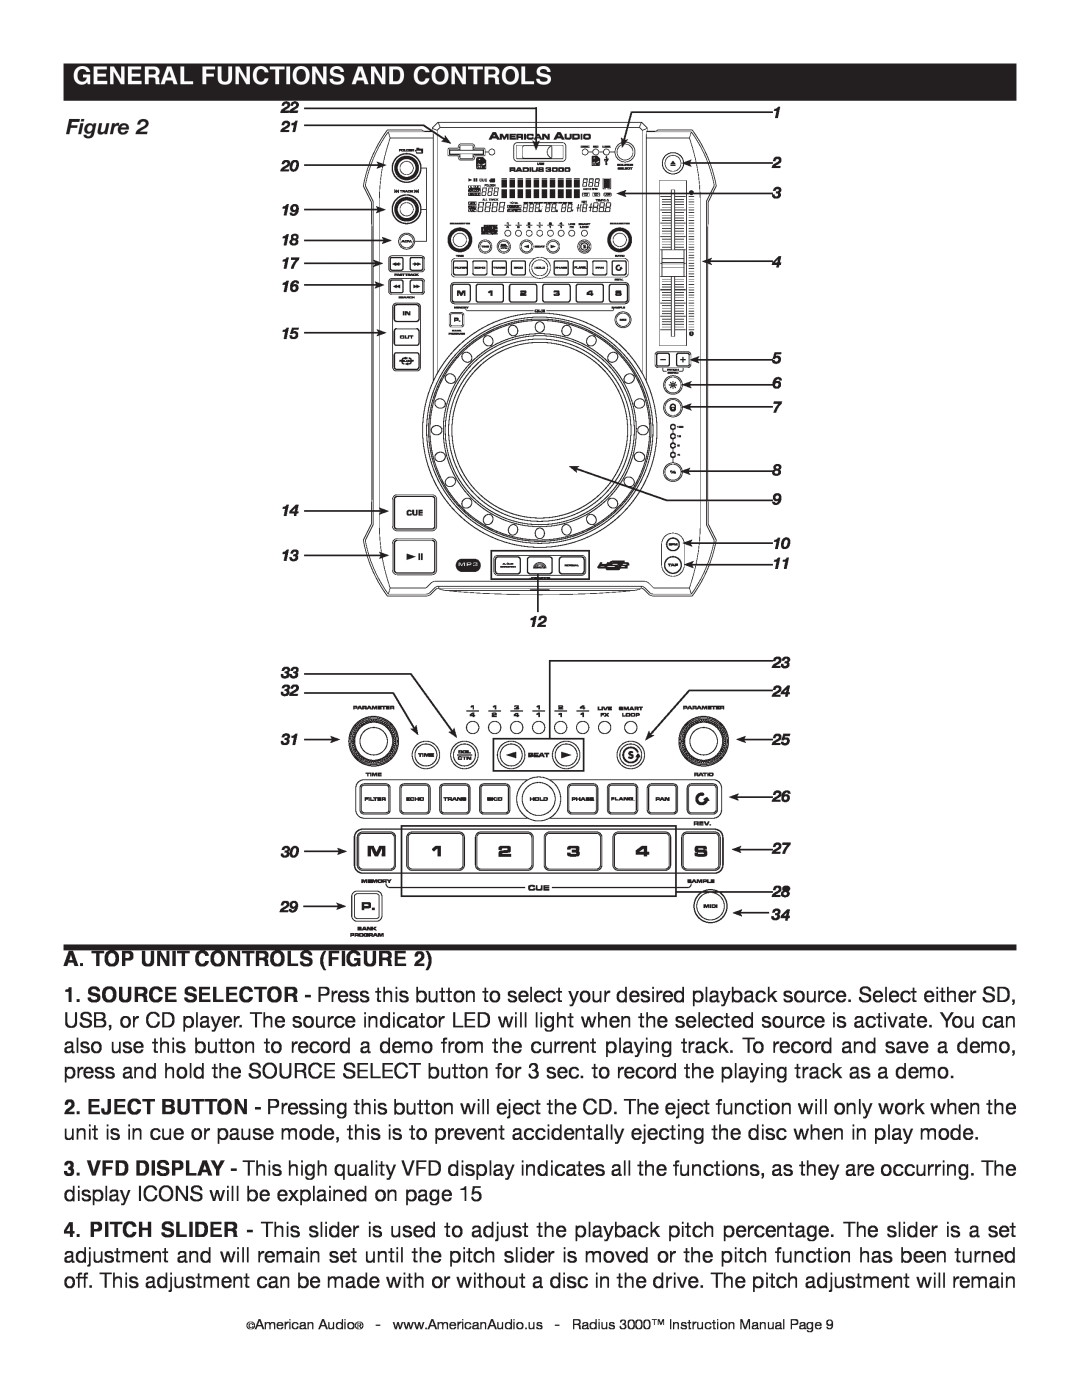 American Audio Radius 3000 manual GENERAL Functions and controls, A. Top unit controls Figure 